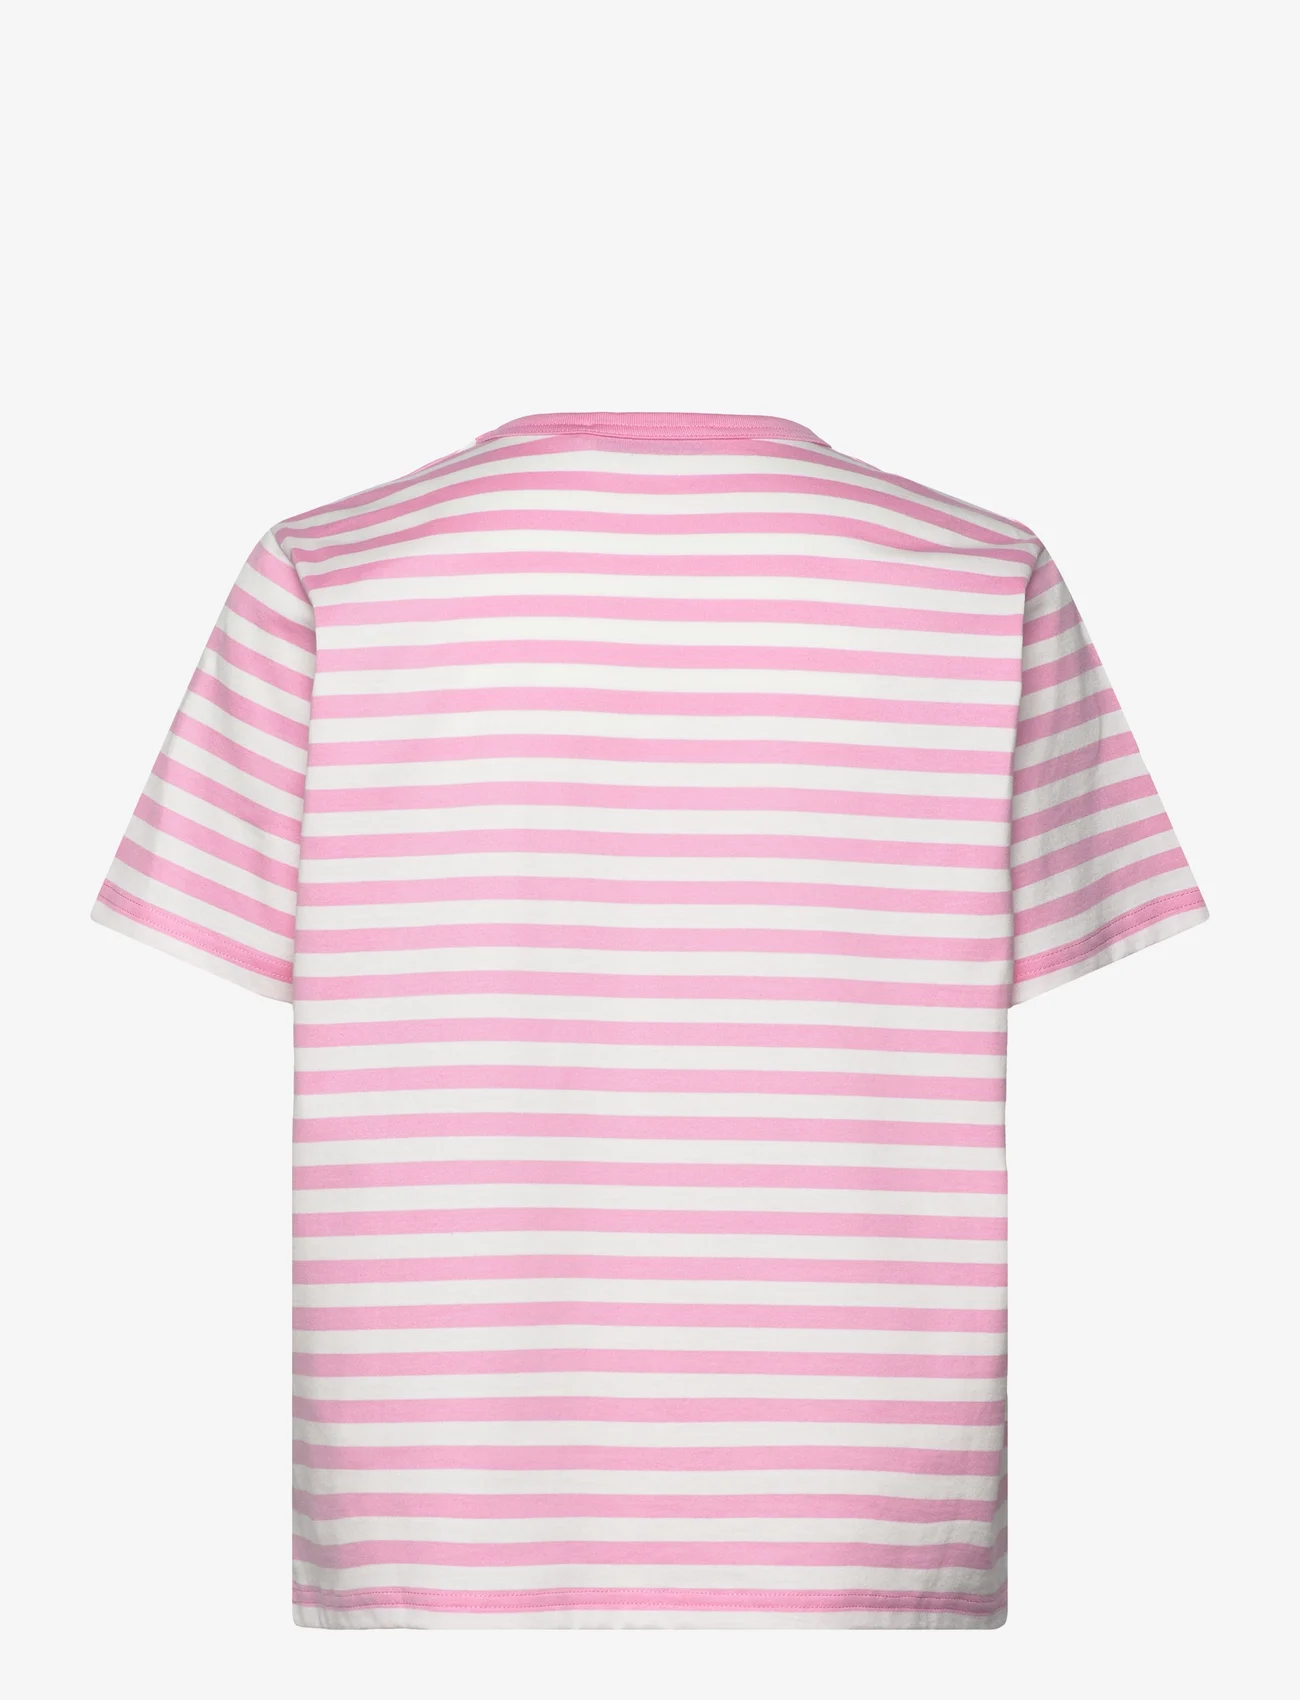 Marimekko - TASARAITA RELAXED SS - t-shirts - light pink, off-white - 1